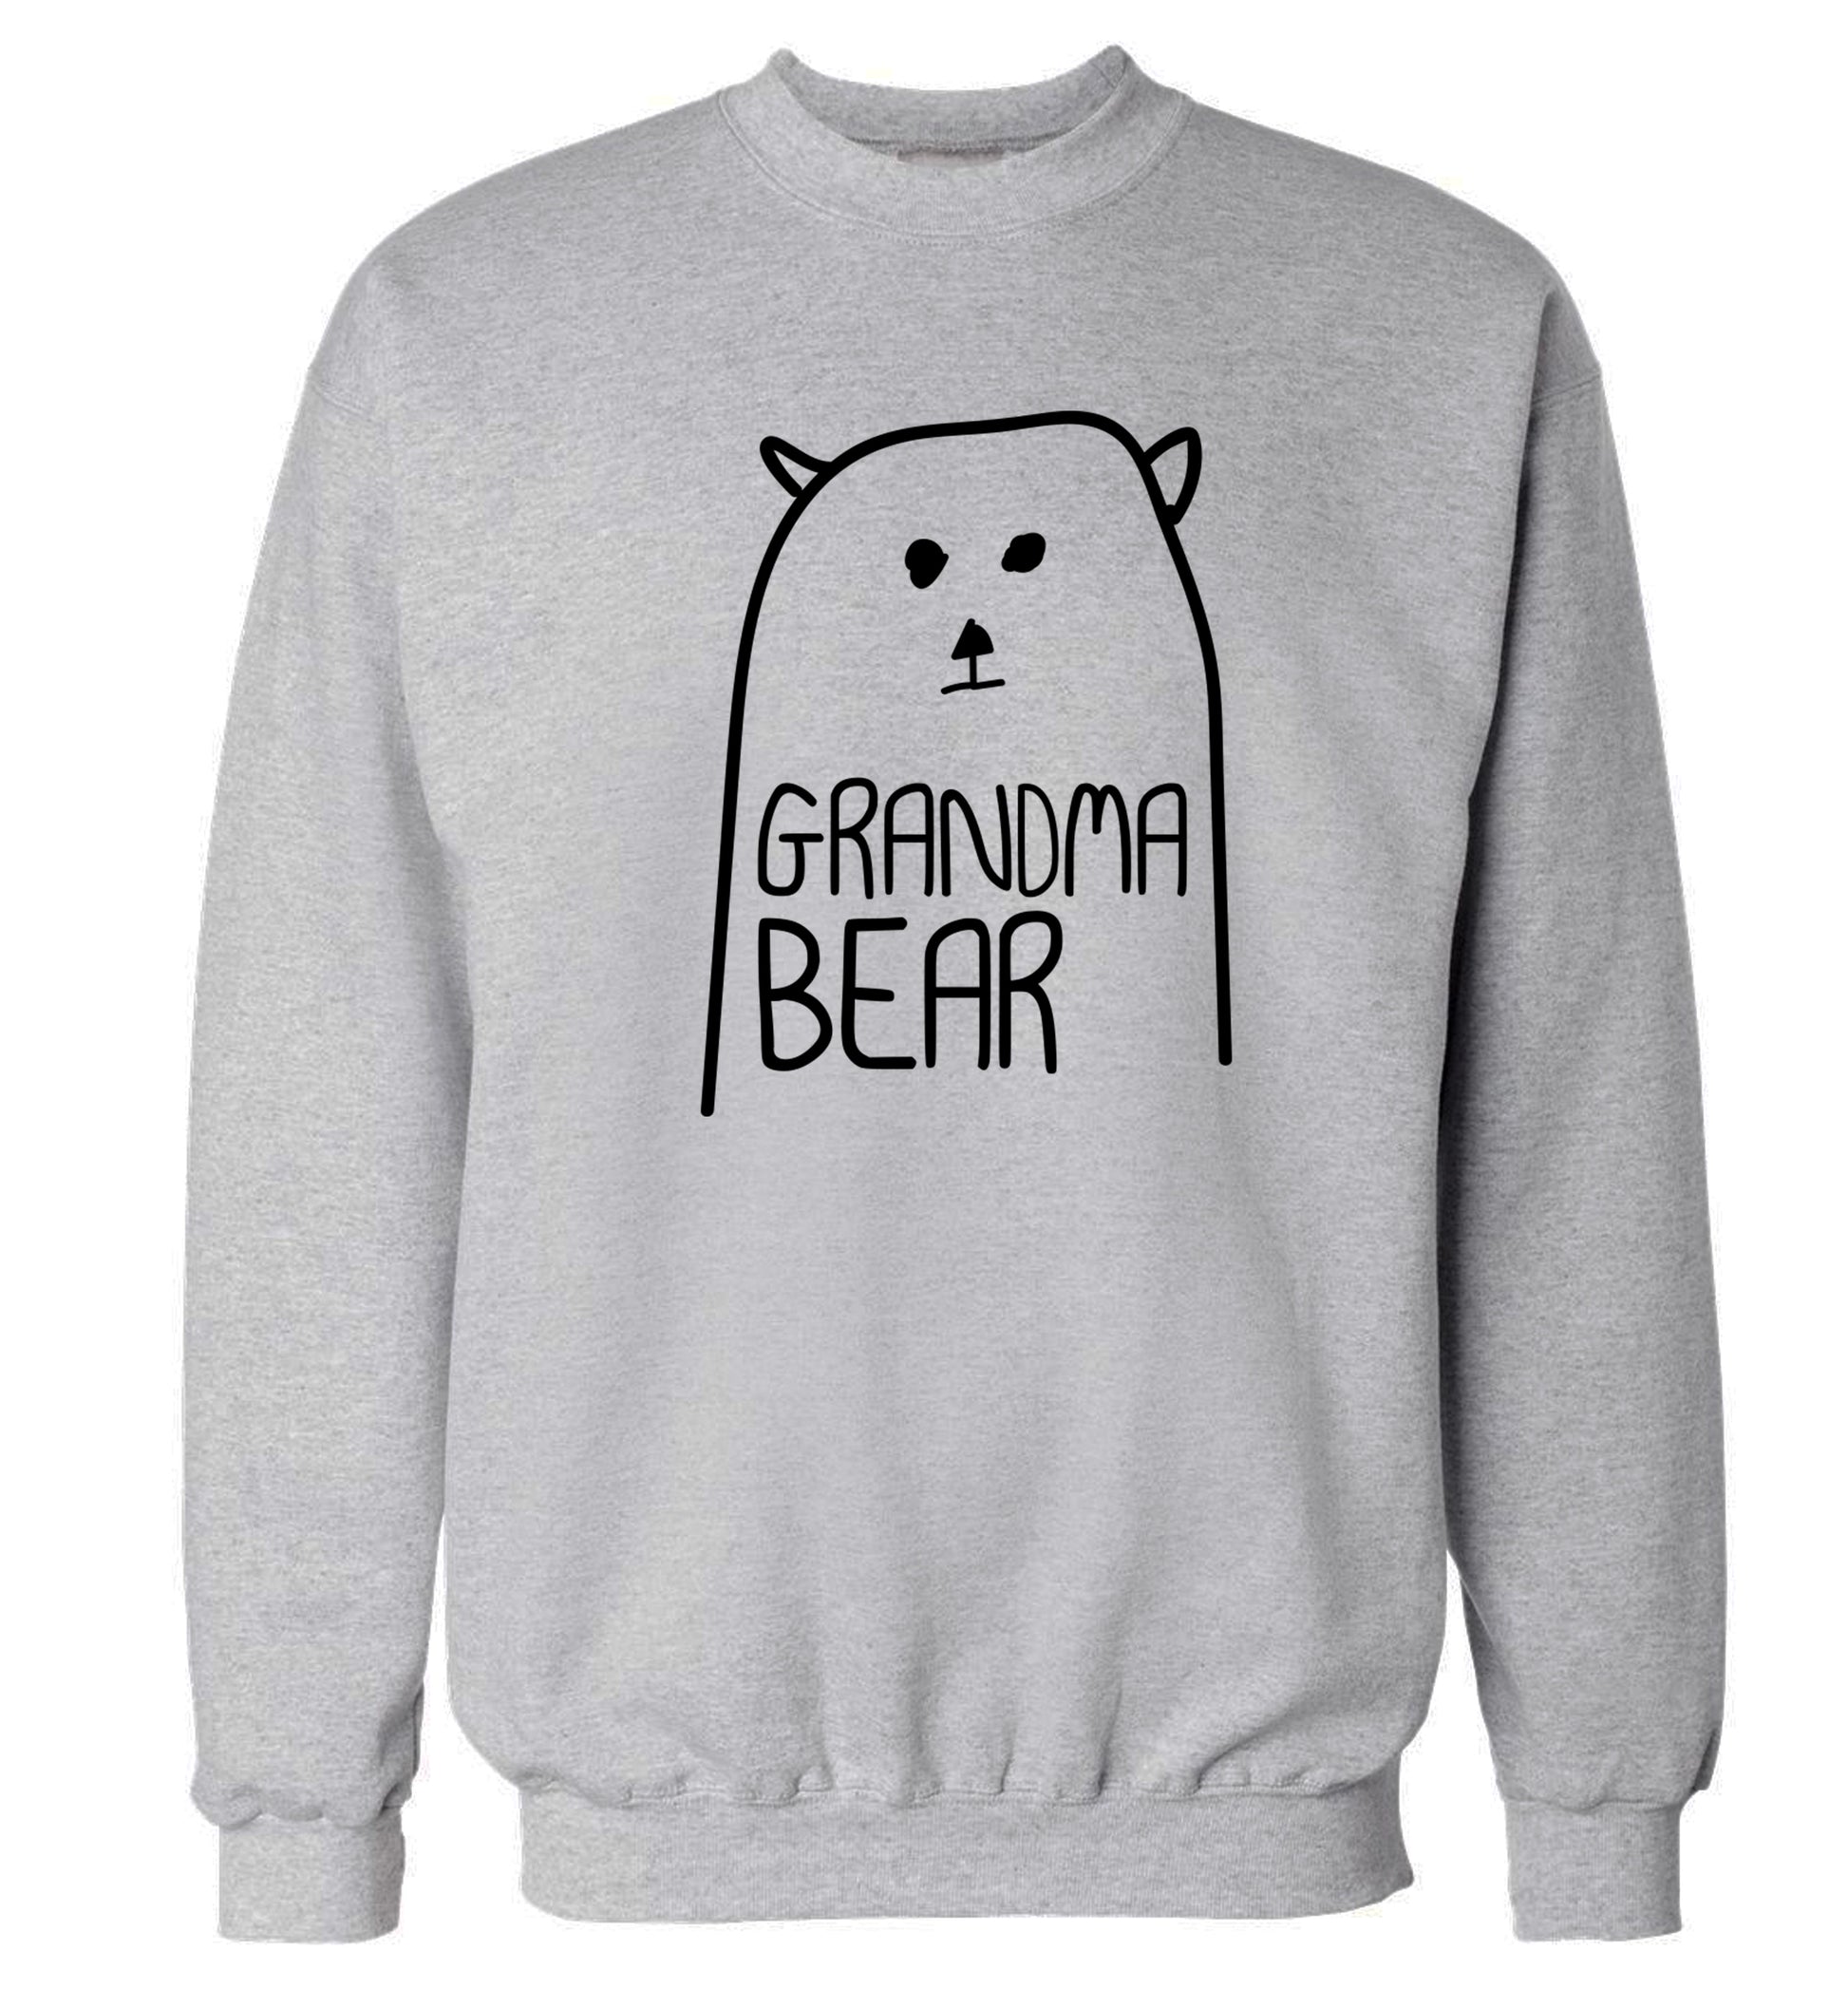 Grandma bear Adult's unisex grey Sweater 2XL